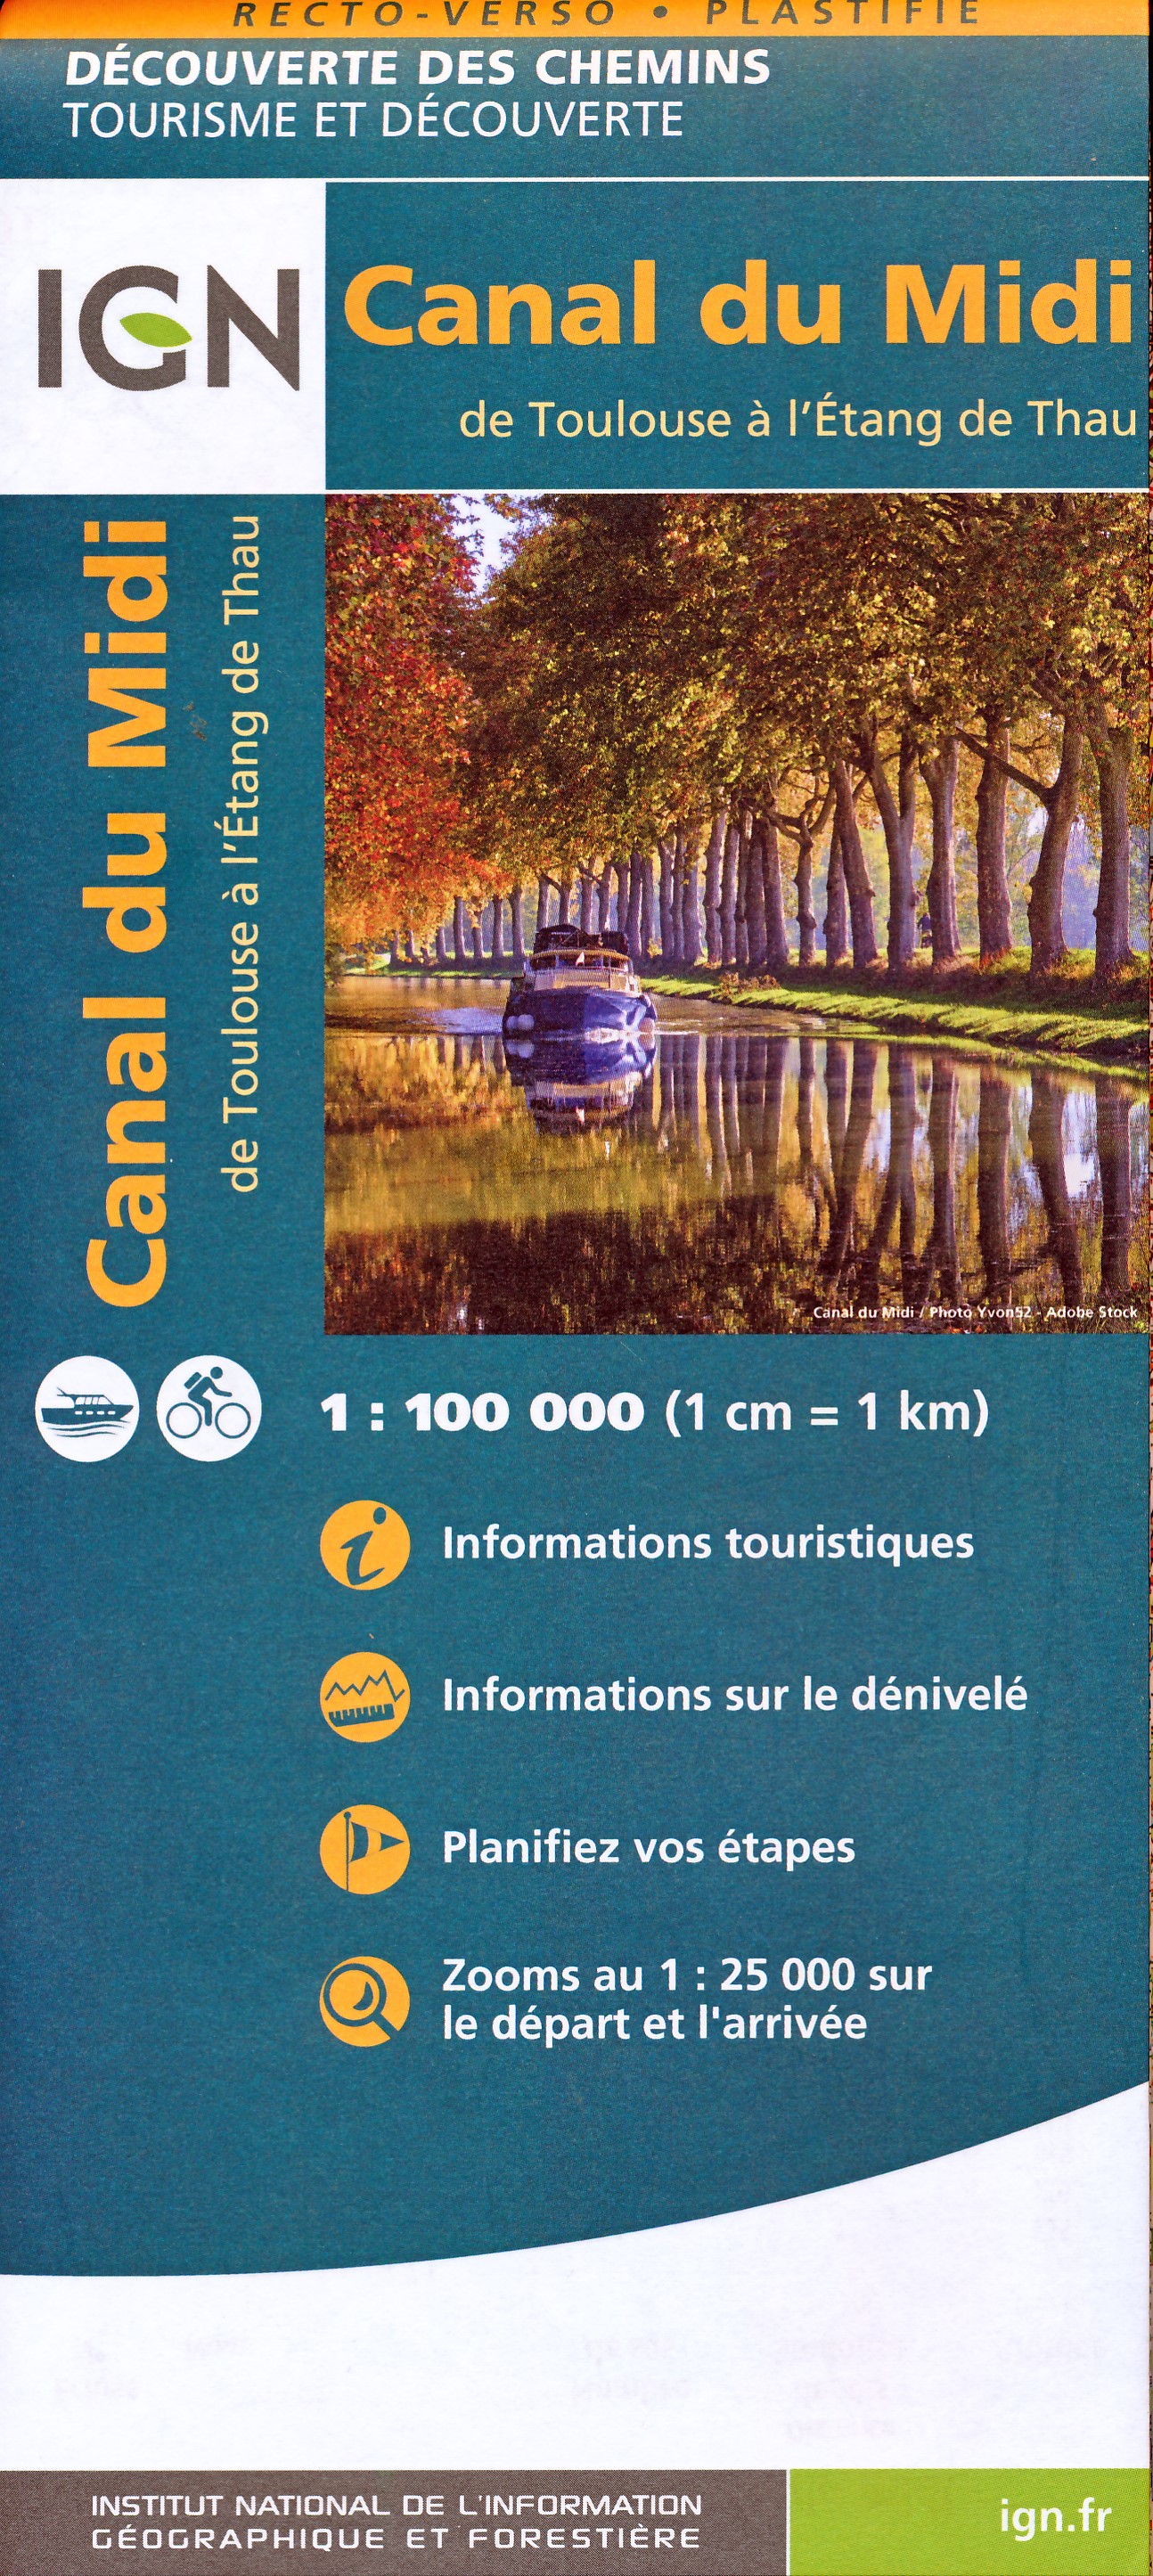 Online bestellen: Fietskaart Canal du Midi | IGN - Institut Géographique National